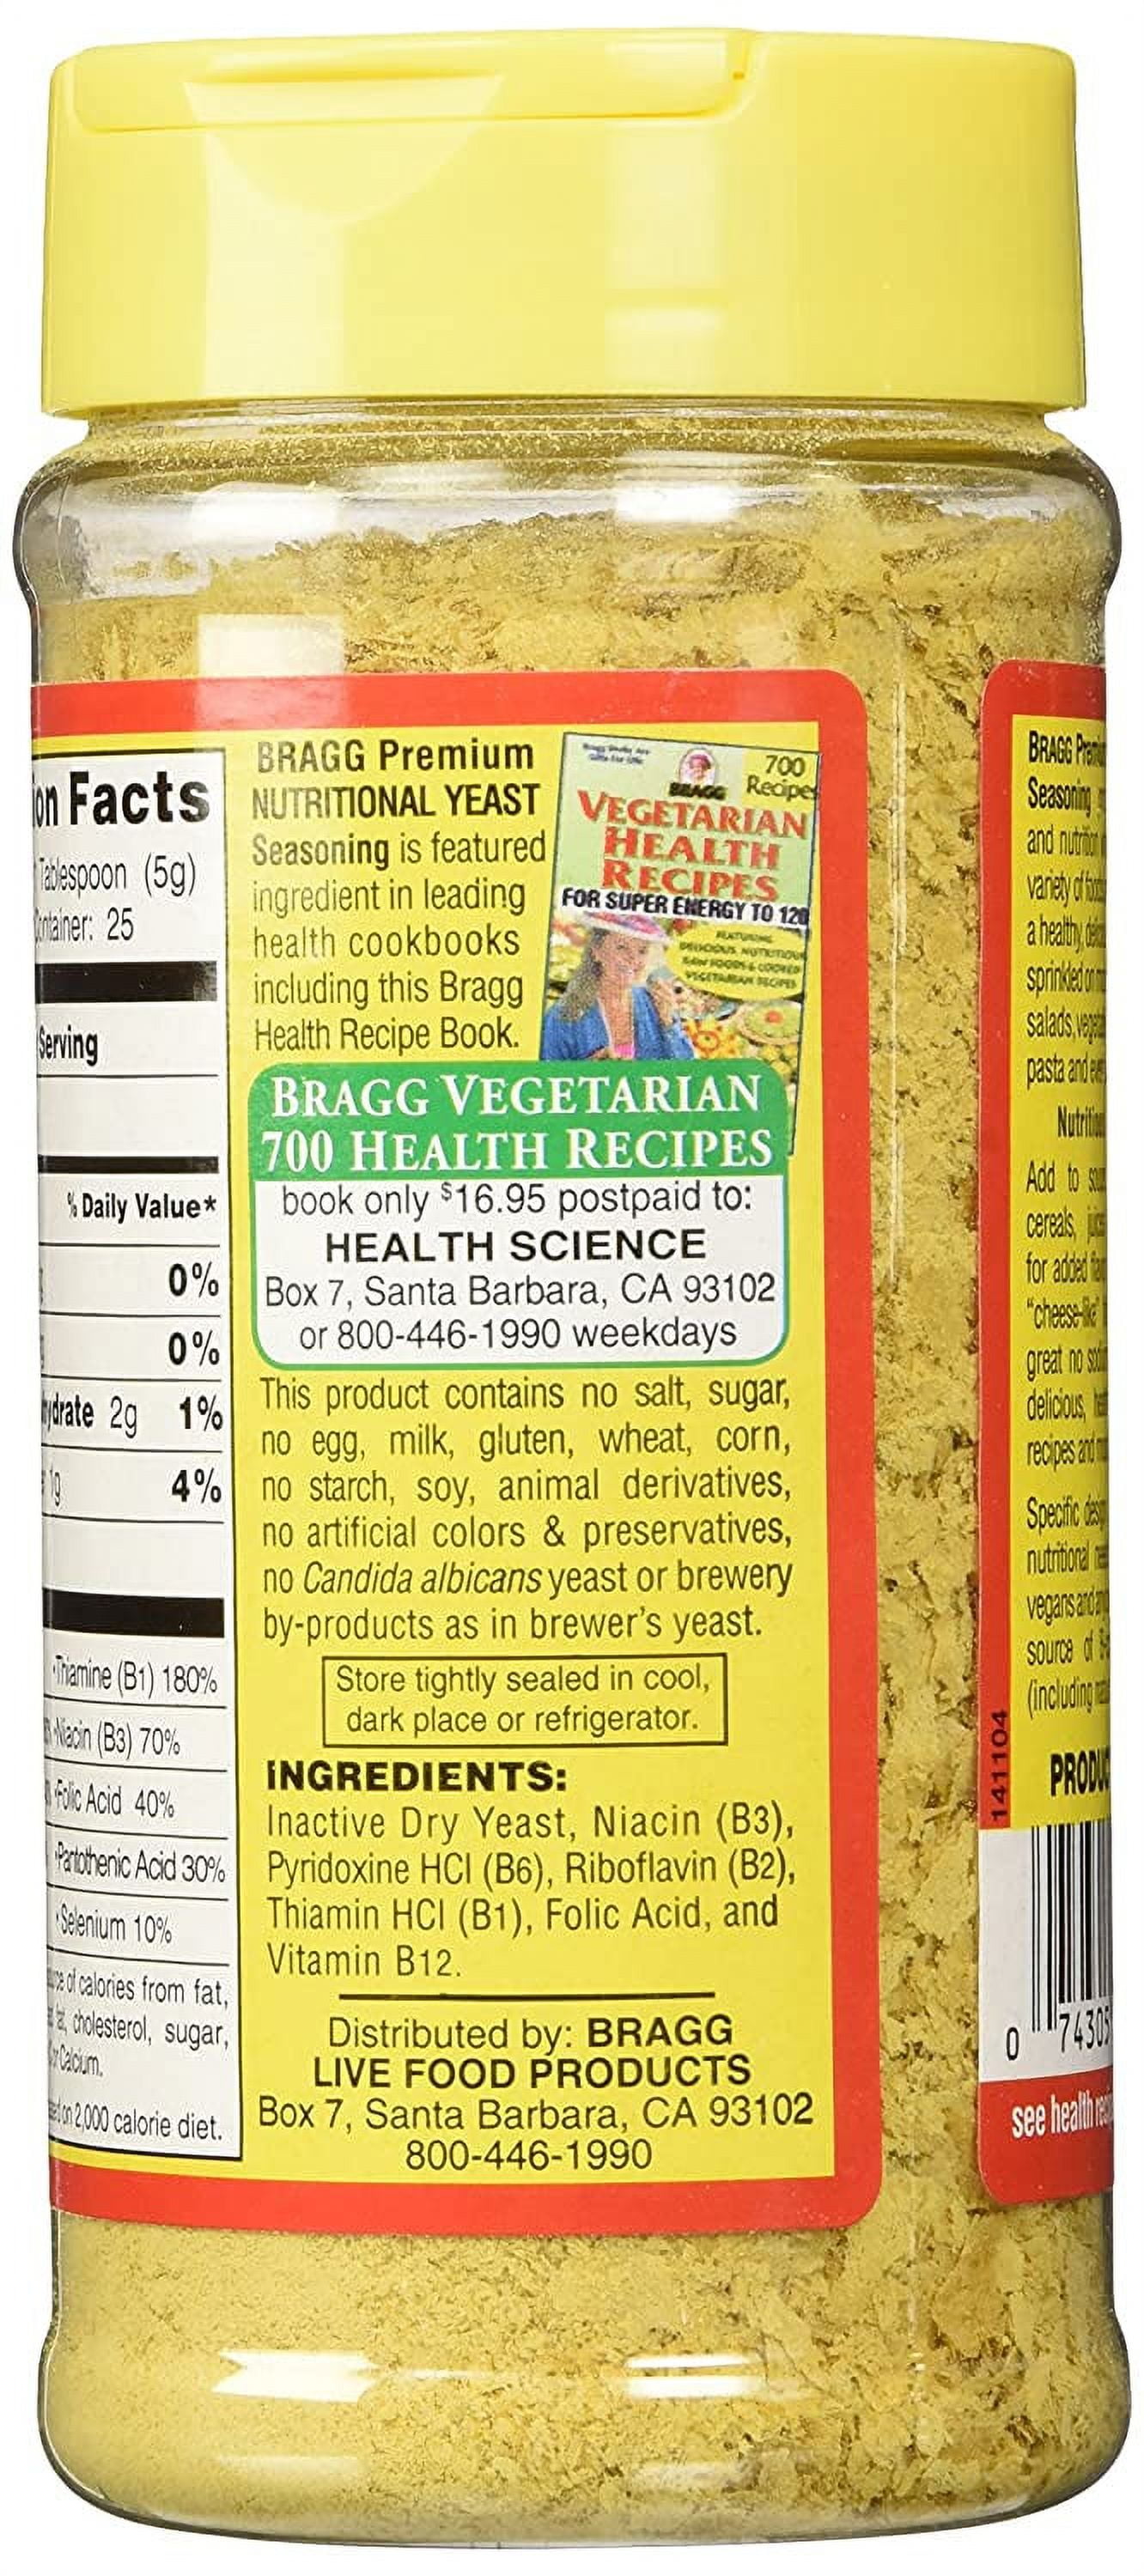 Bragg Premium Nutritional Yeast Seasoning, 4.5 oz.